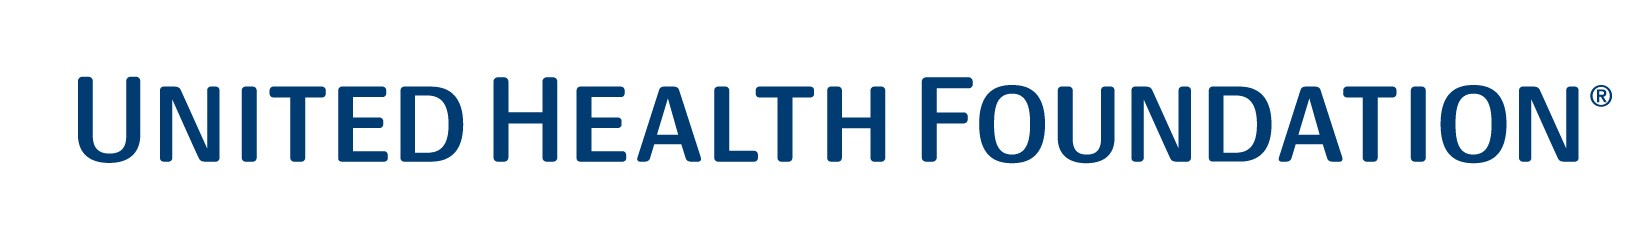 United Health Foundation logo